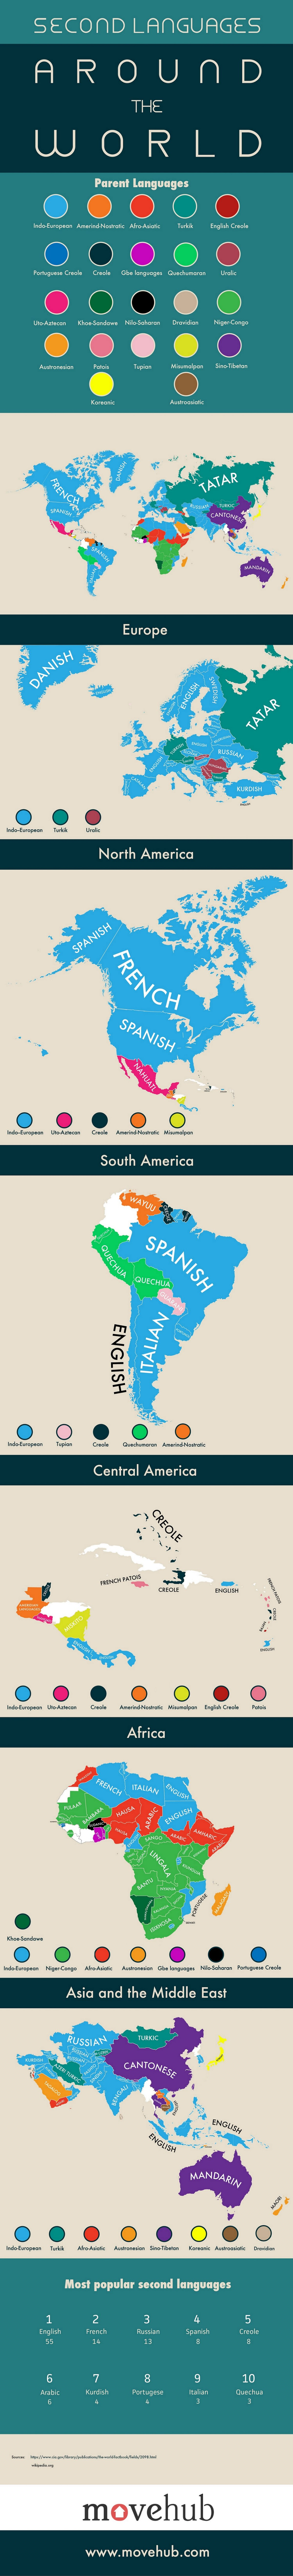 second-languages-map-1350px